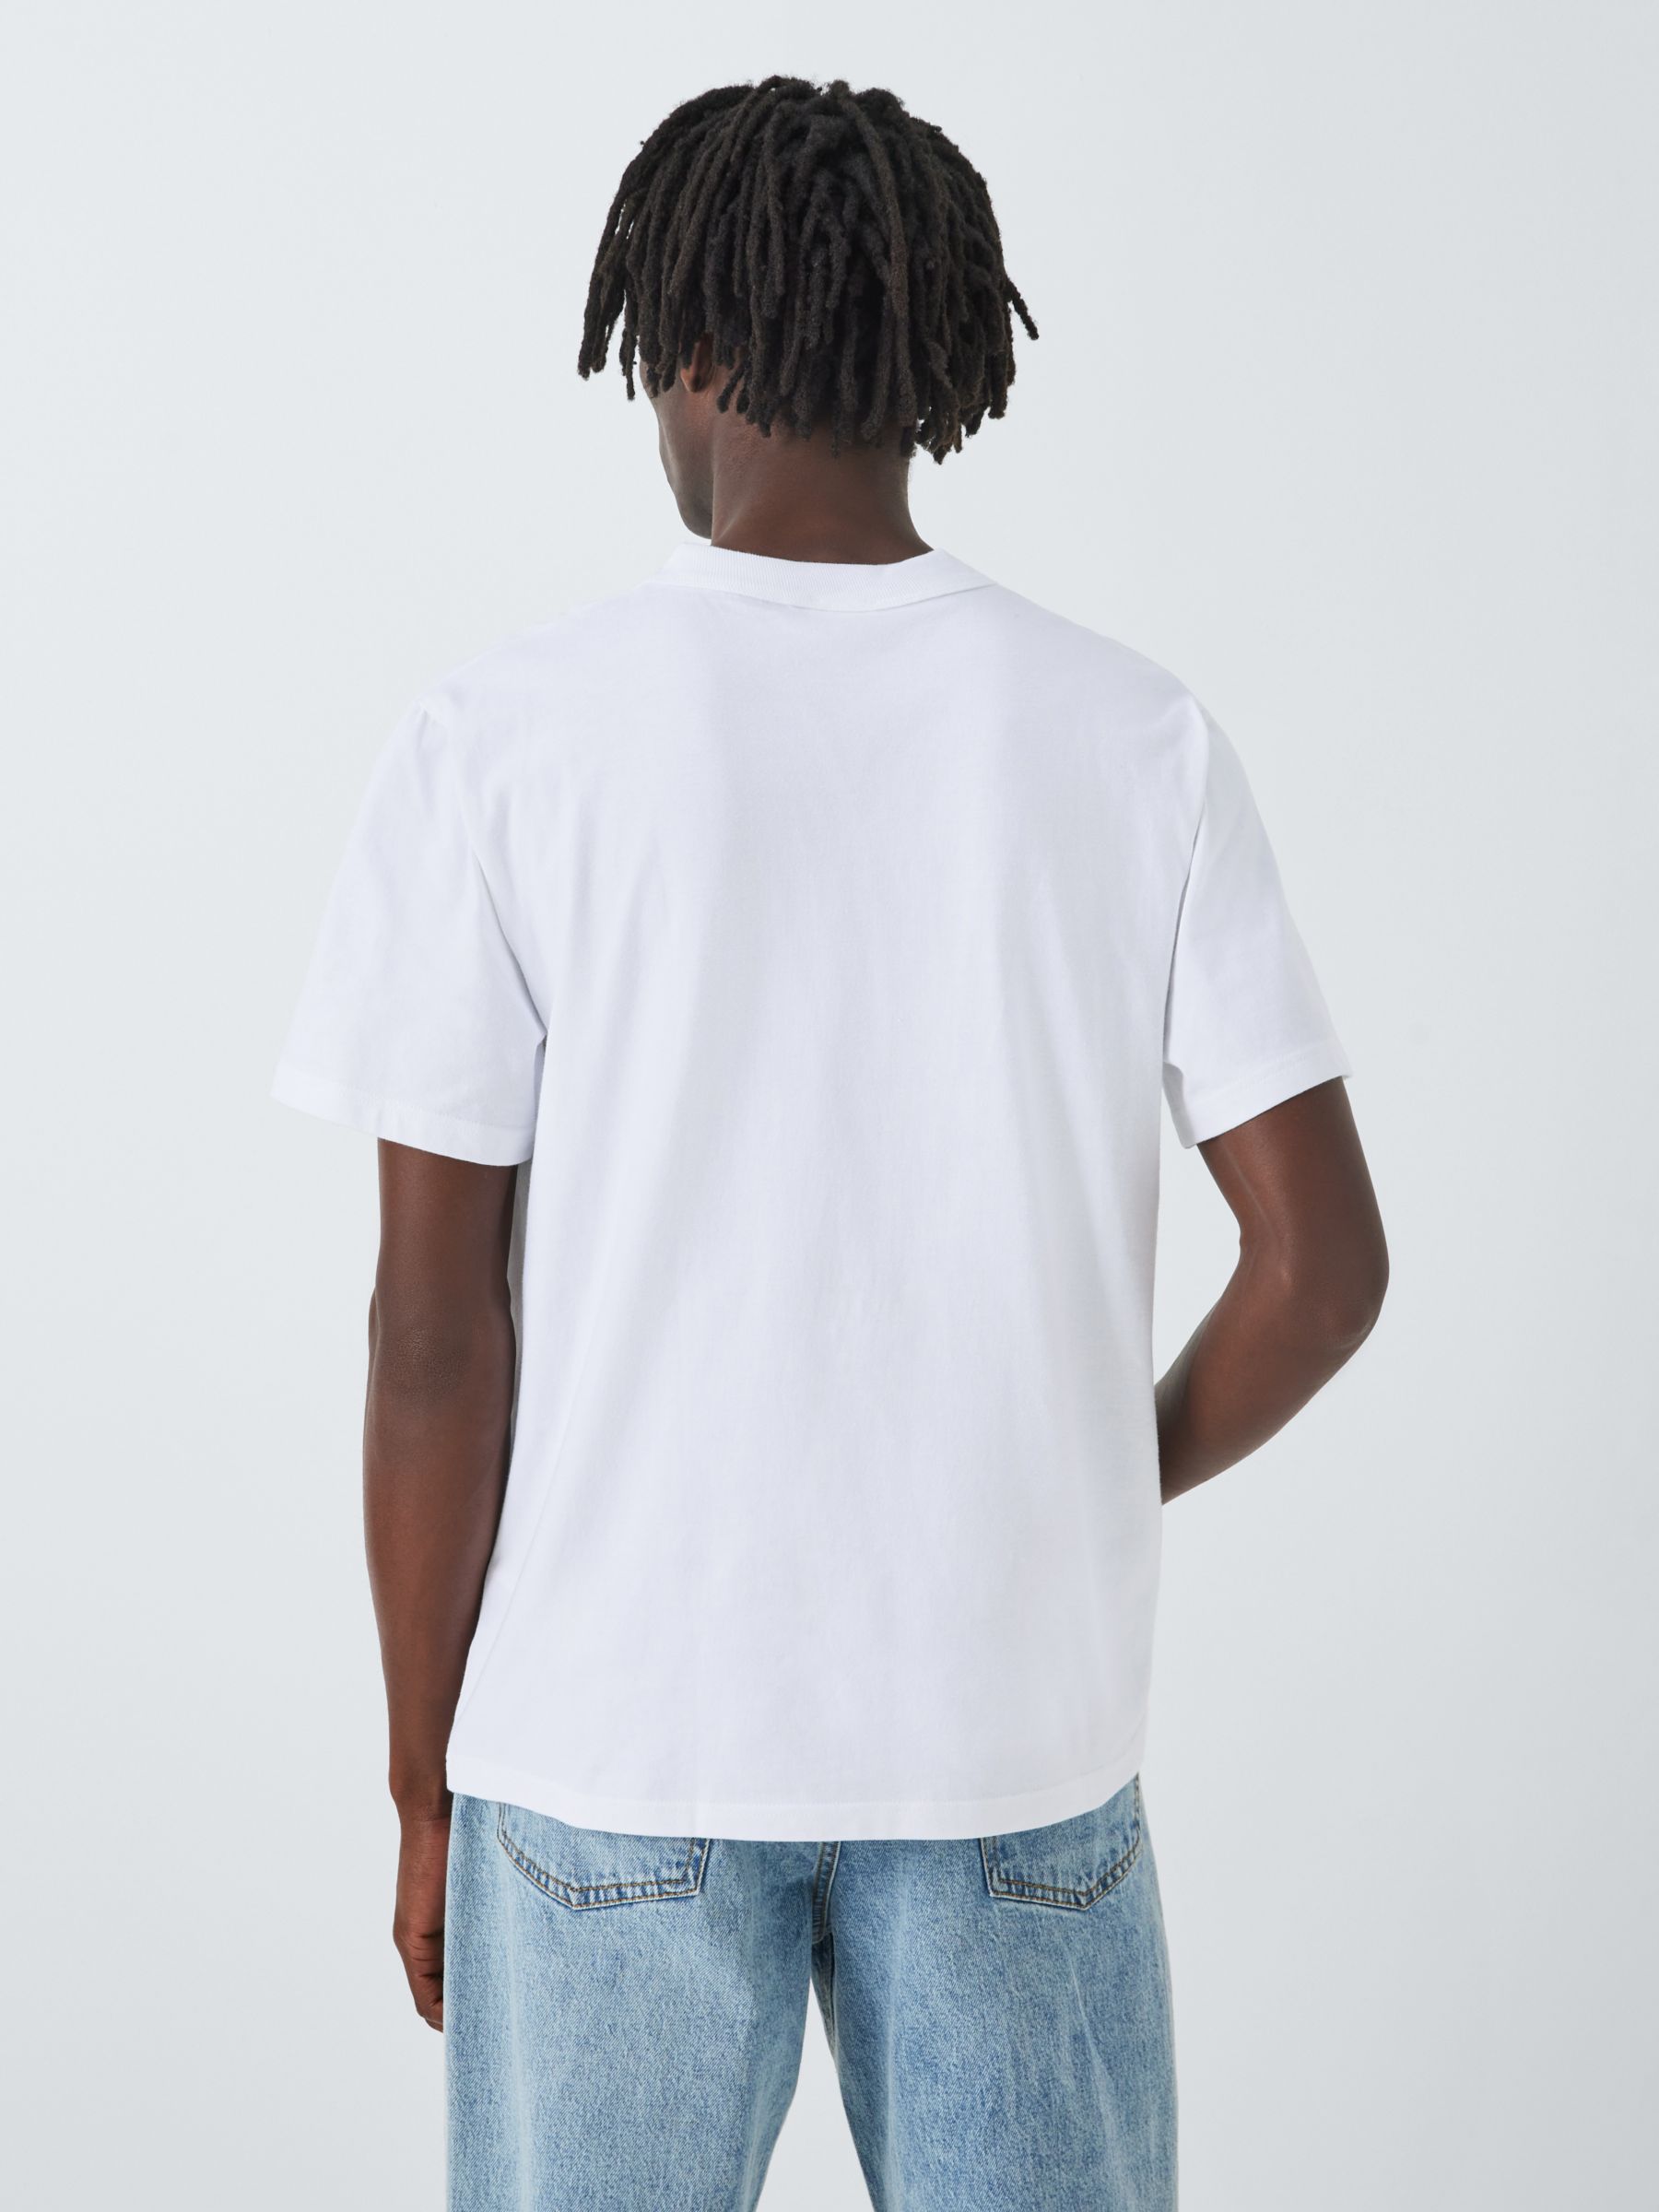 Armor Lux Cotton Crew Neck T-Shirt, Blanc, S